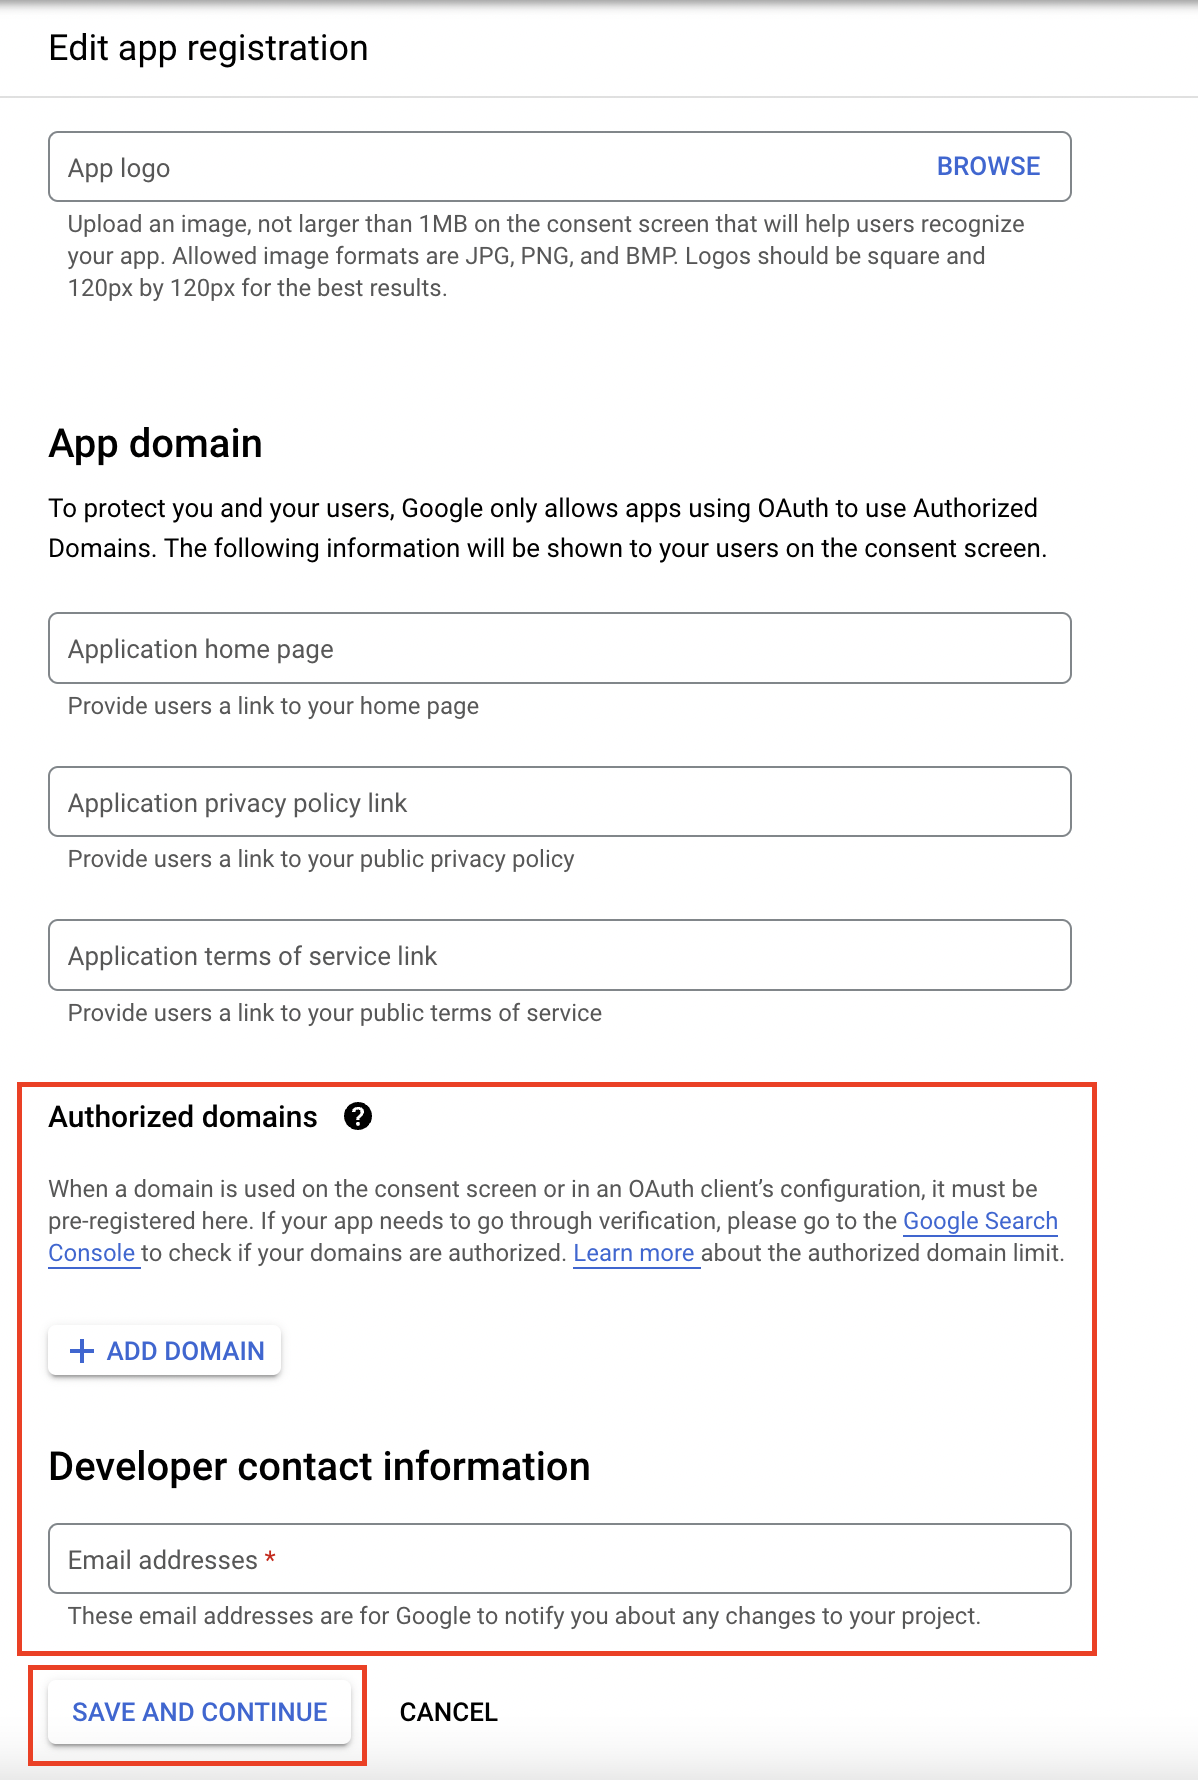 Edit app registration - Developer contact info